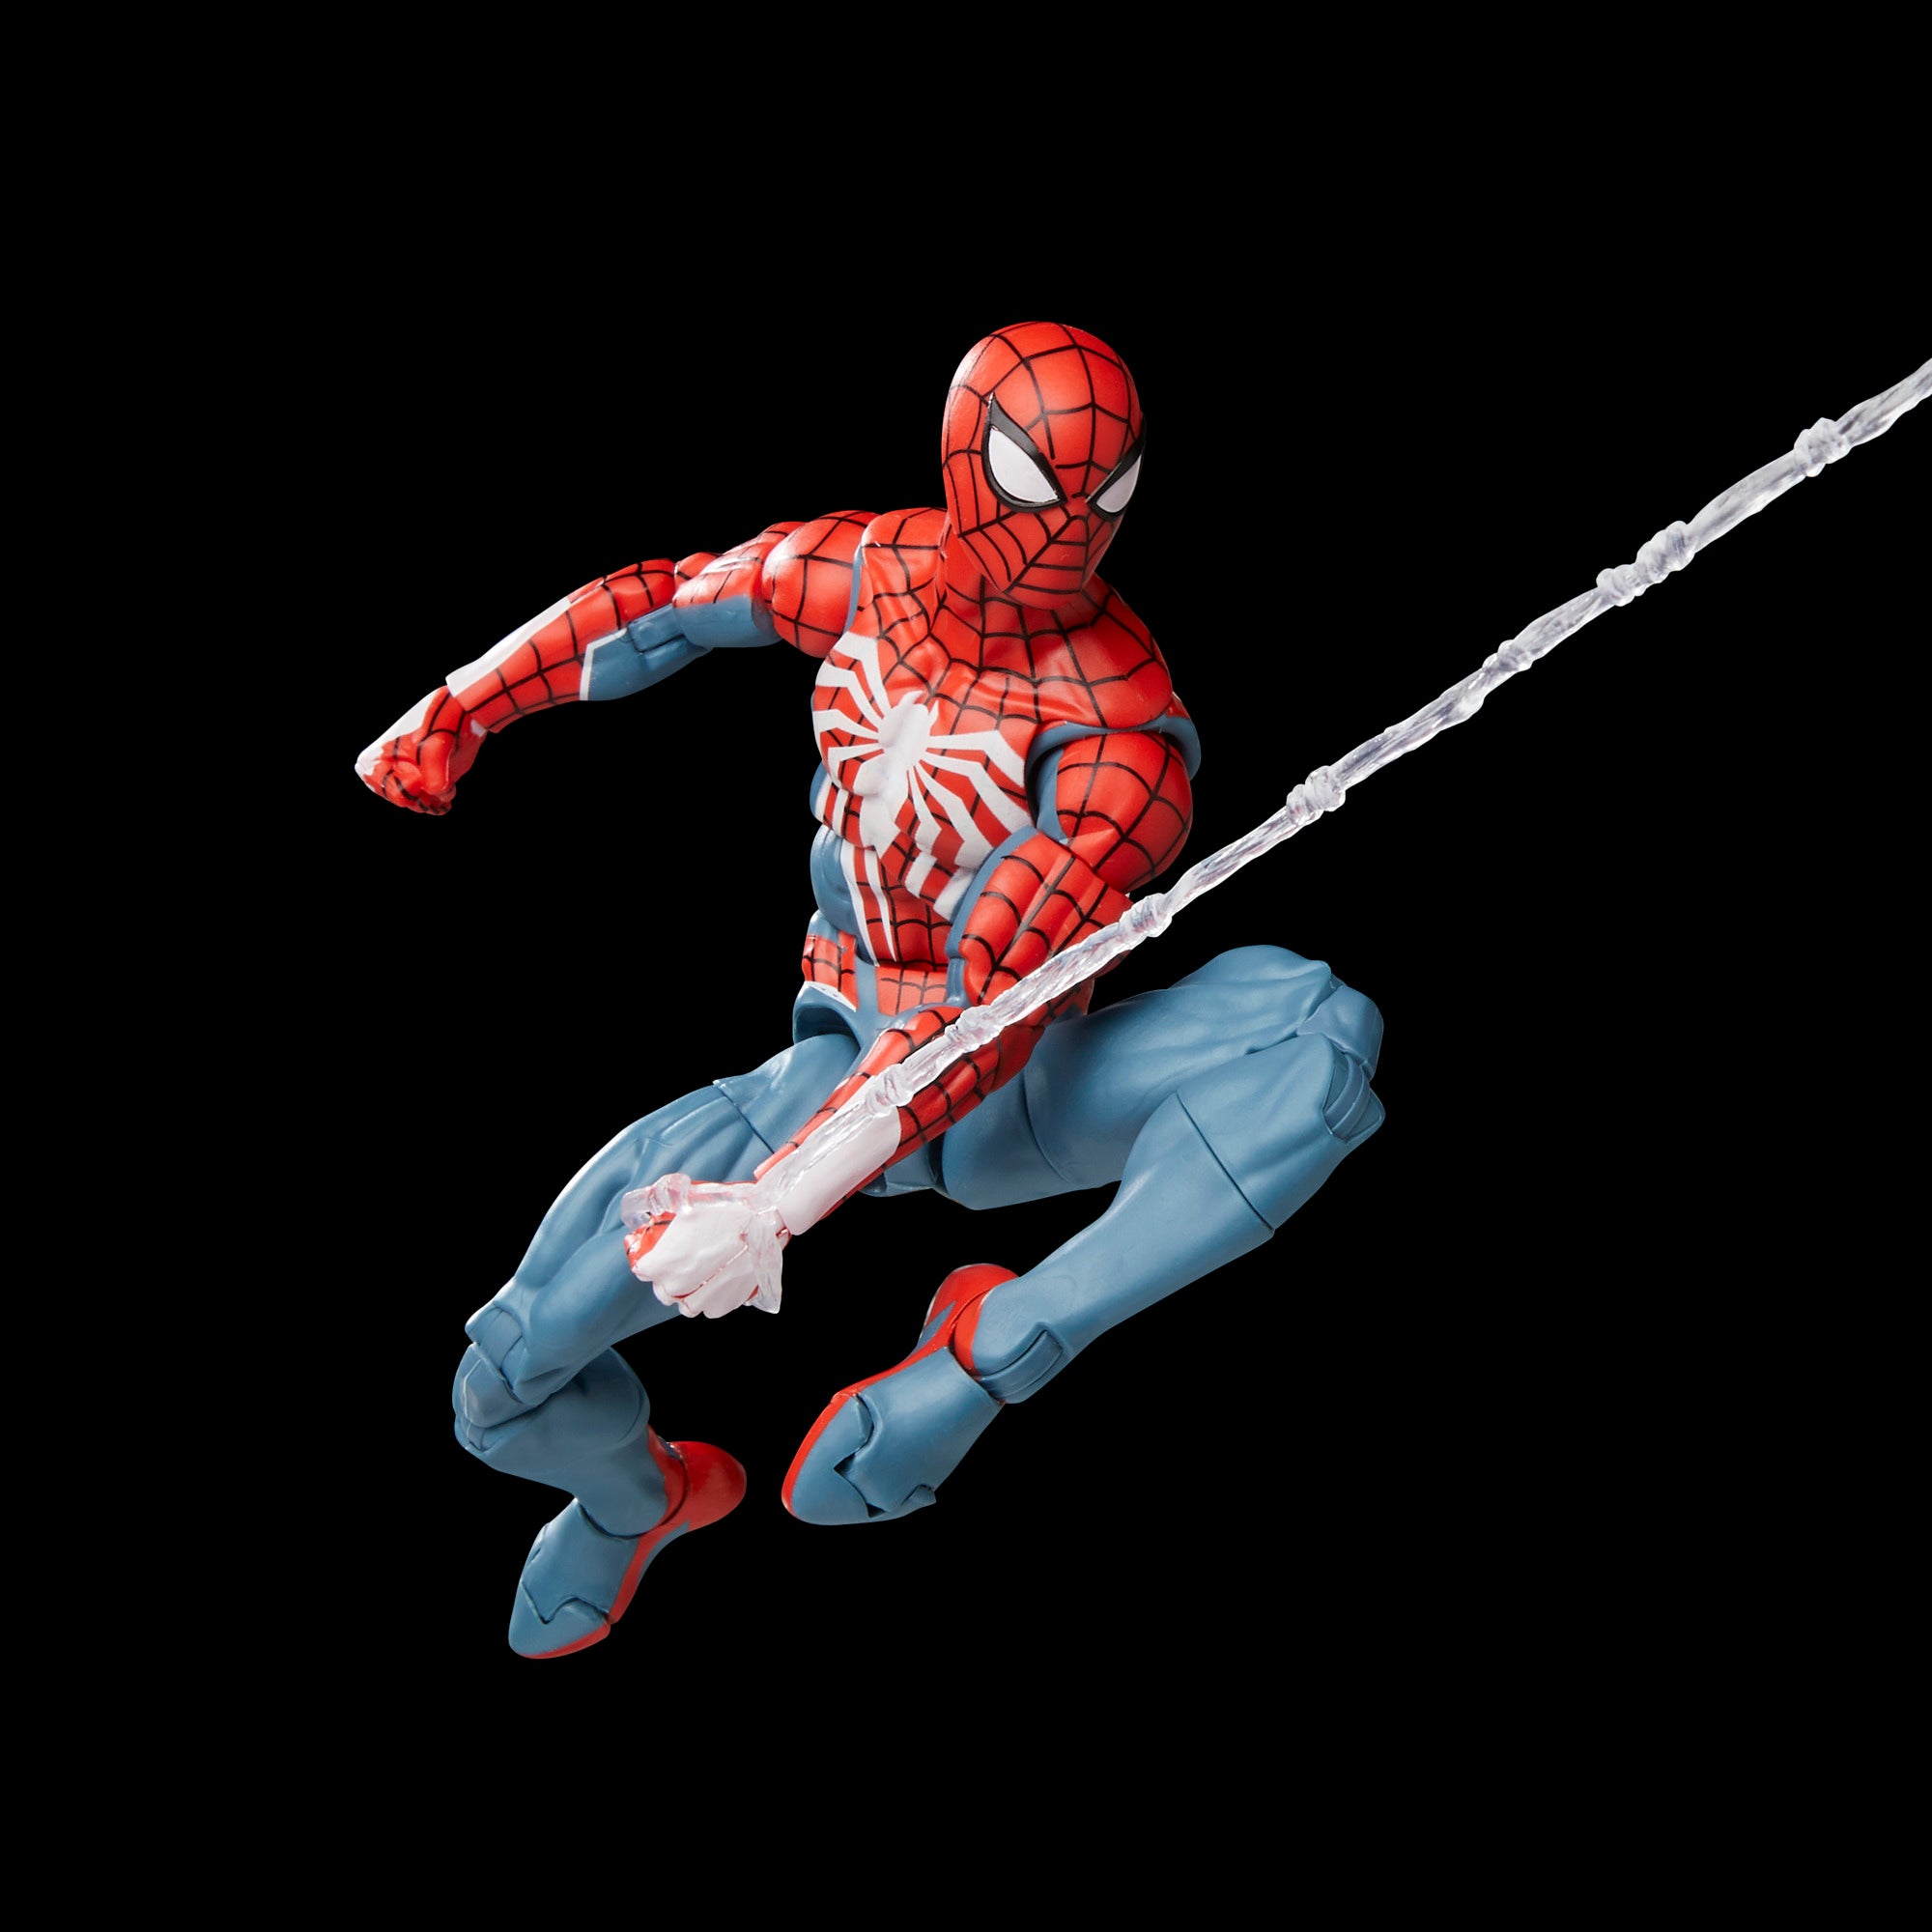 Hasbro Marvel Legends 6-inch Spider-Man Retro Collection Figure, Accessories